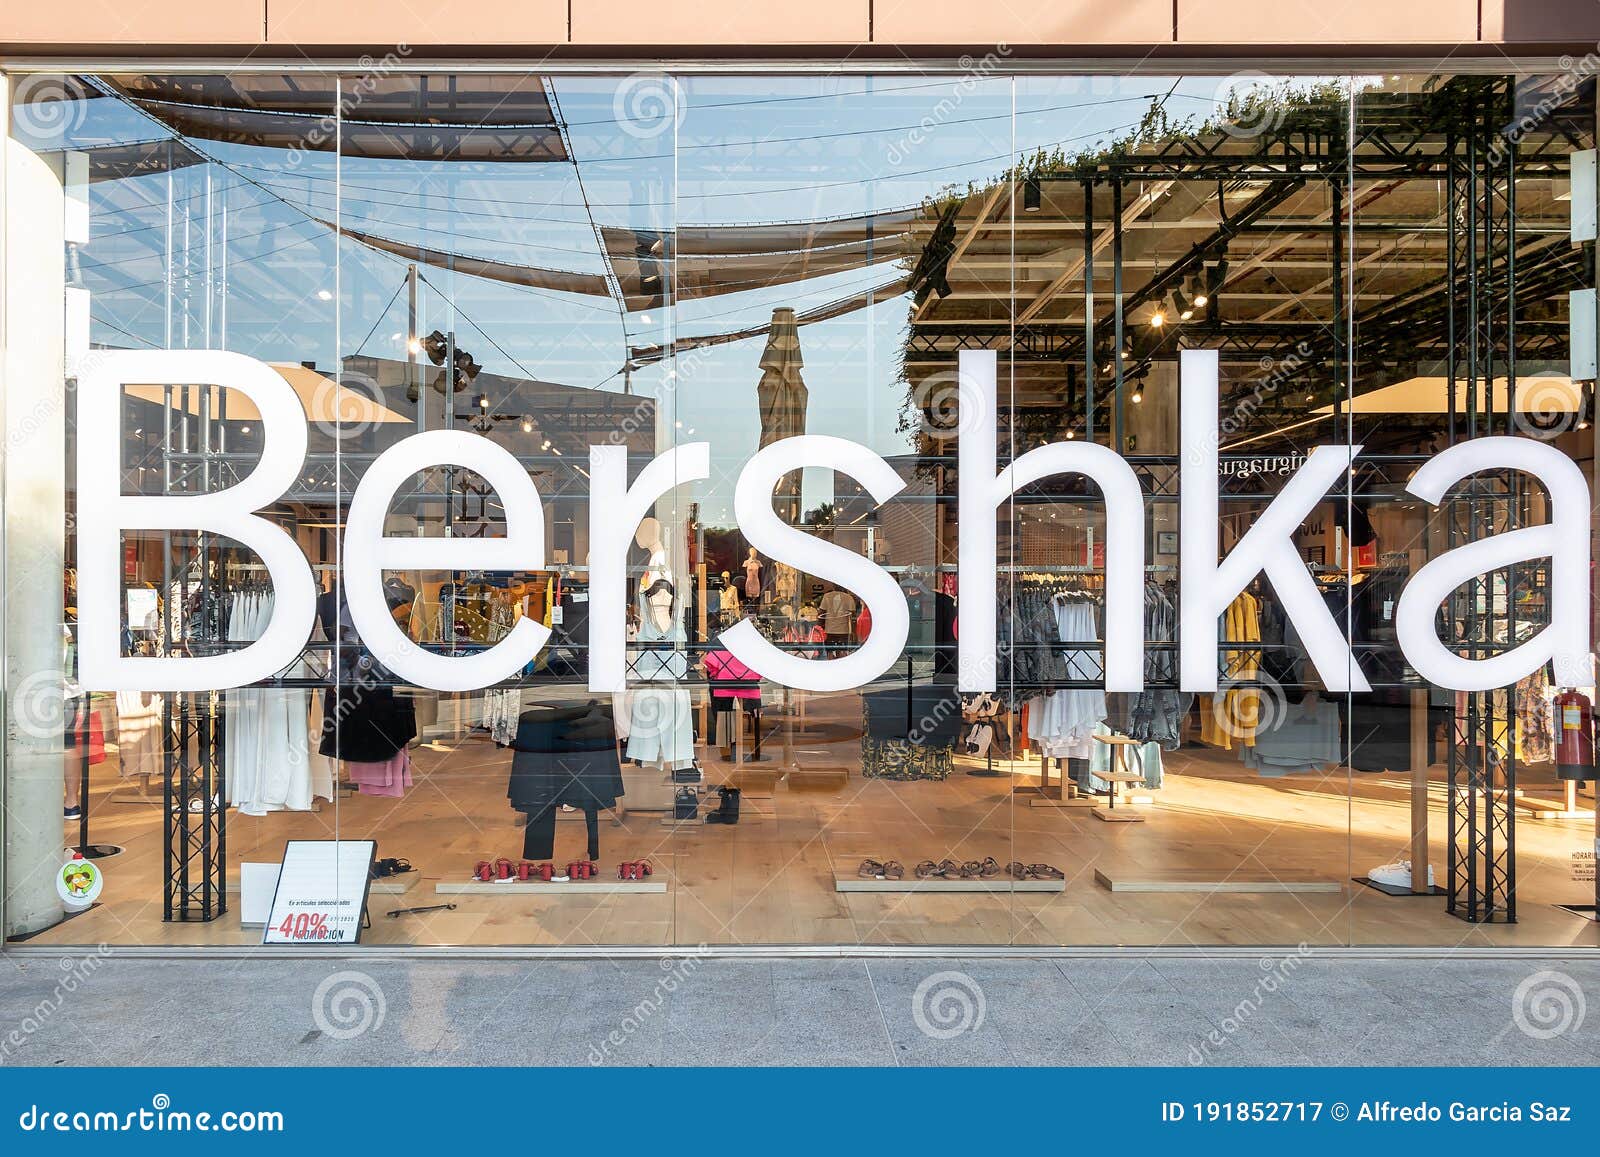 Huelva, Spain - July 27, 2020: Bershka Fashion Store in Holea Shopping ...